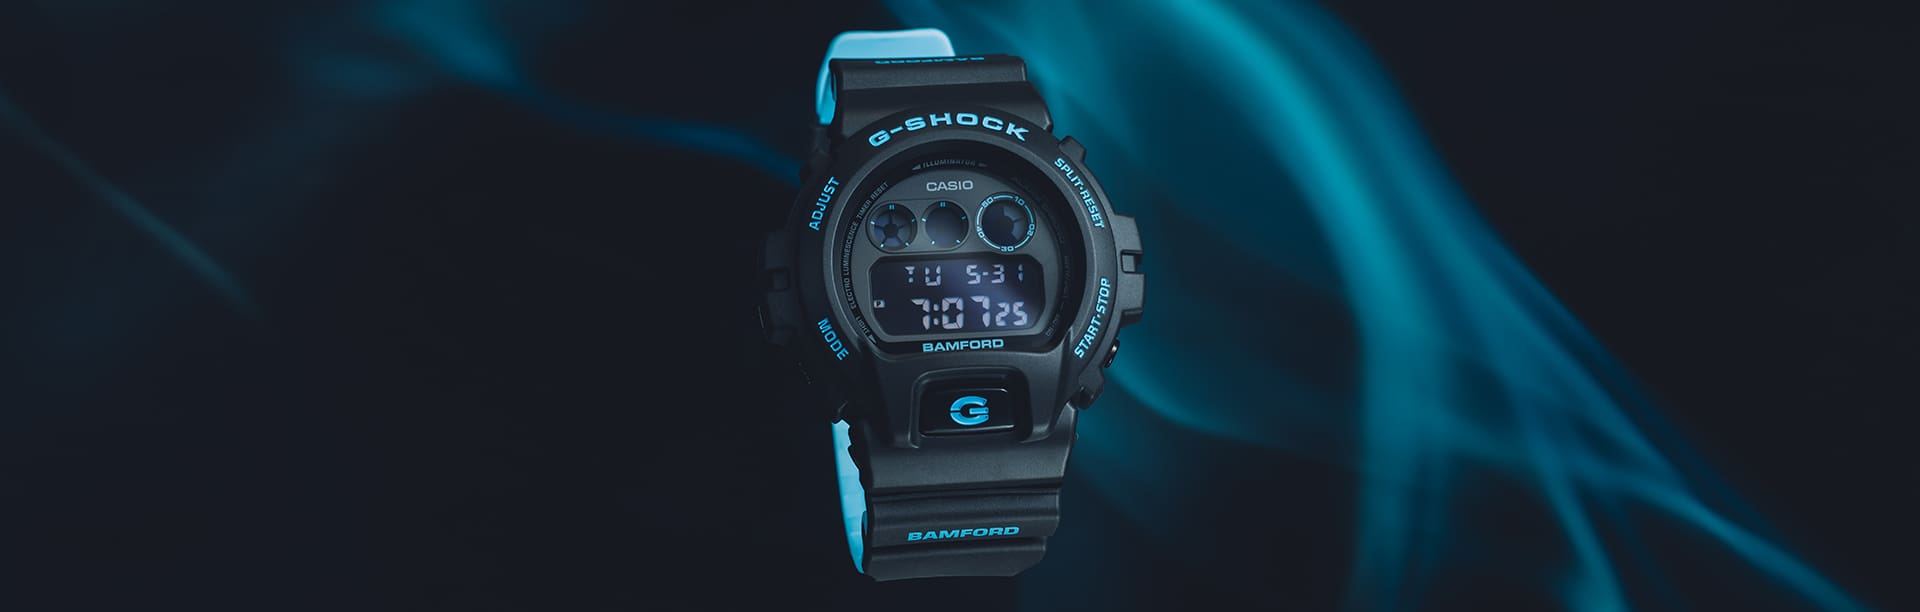 DW6900BWD Bamford x G-SHOCK watch on a black background with blue aura